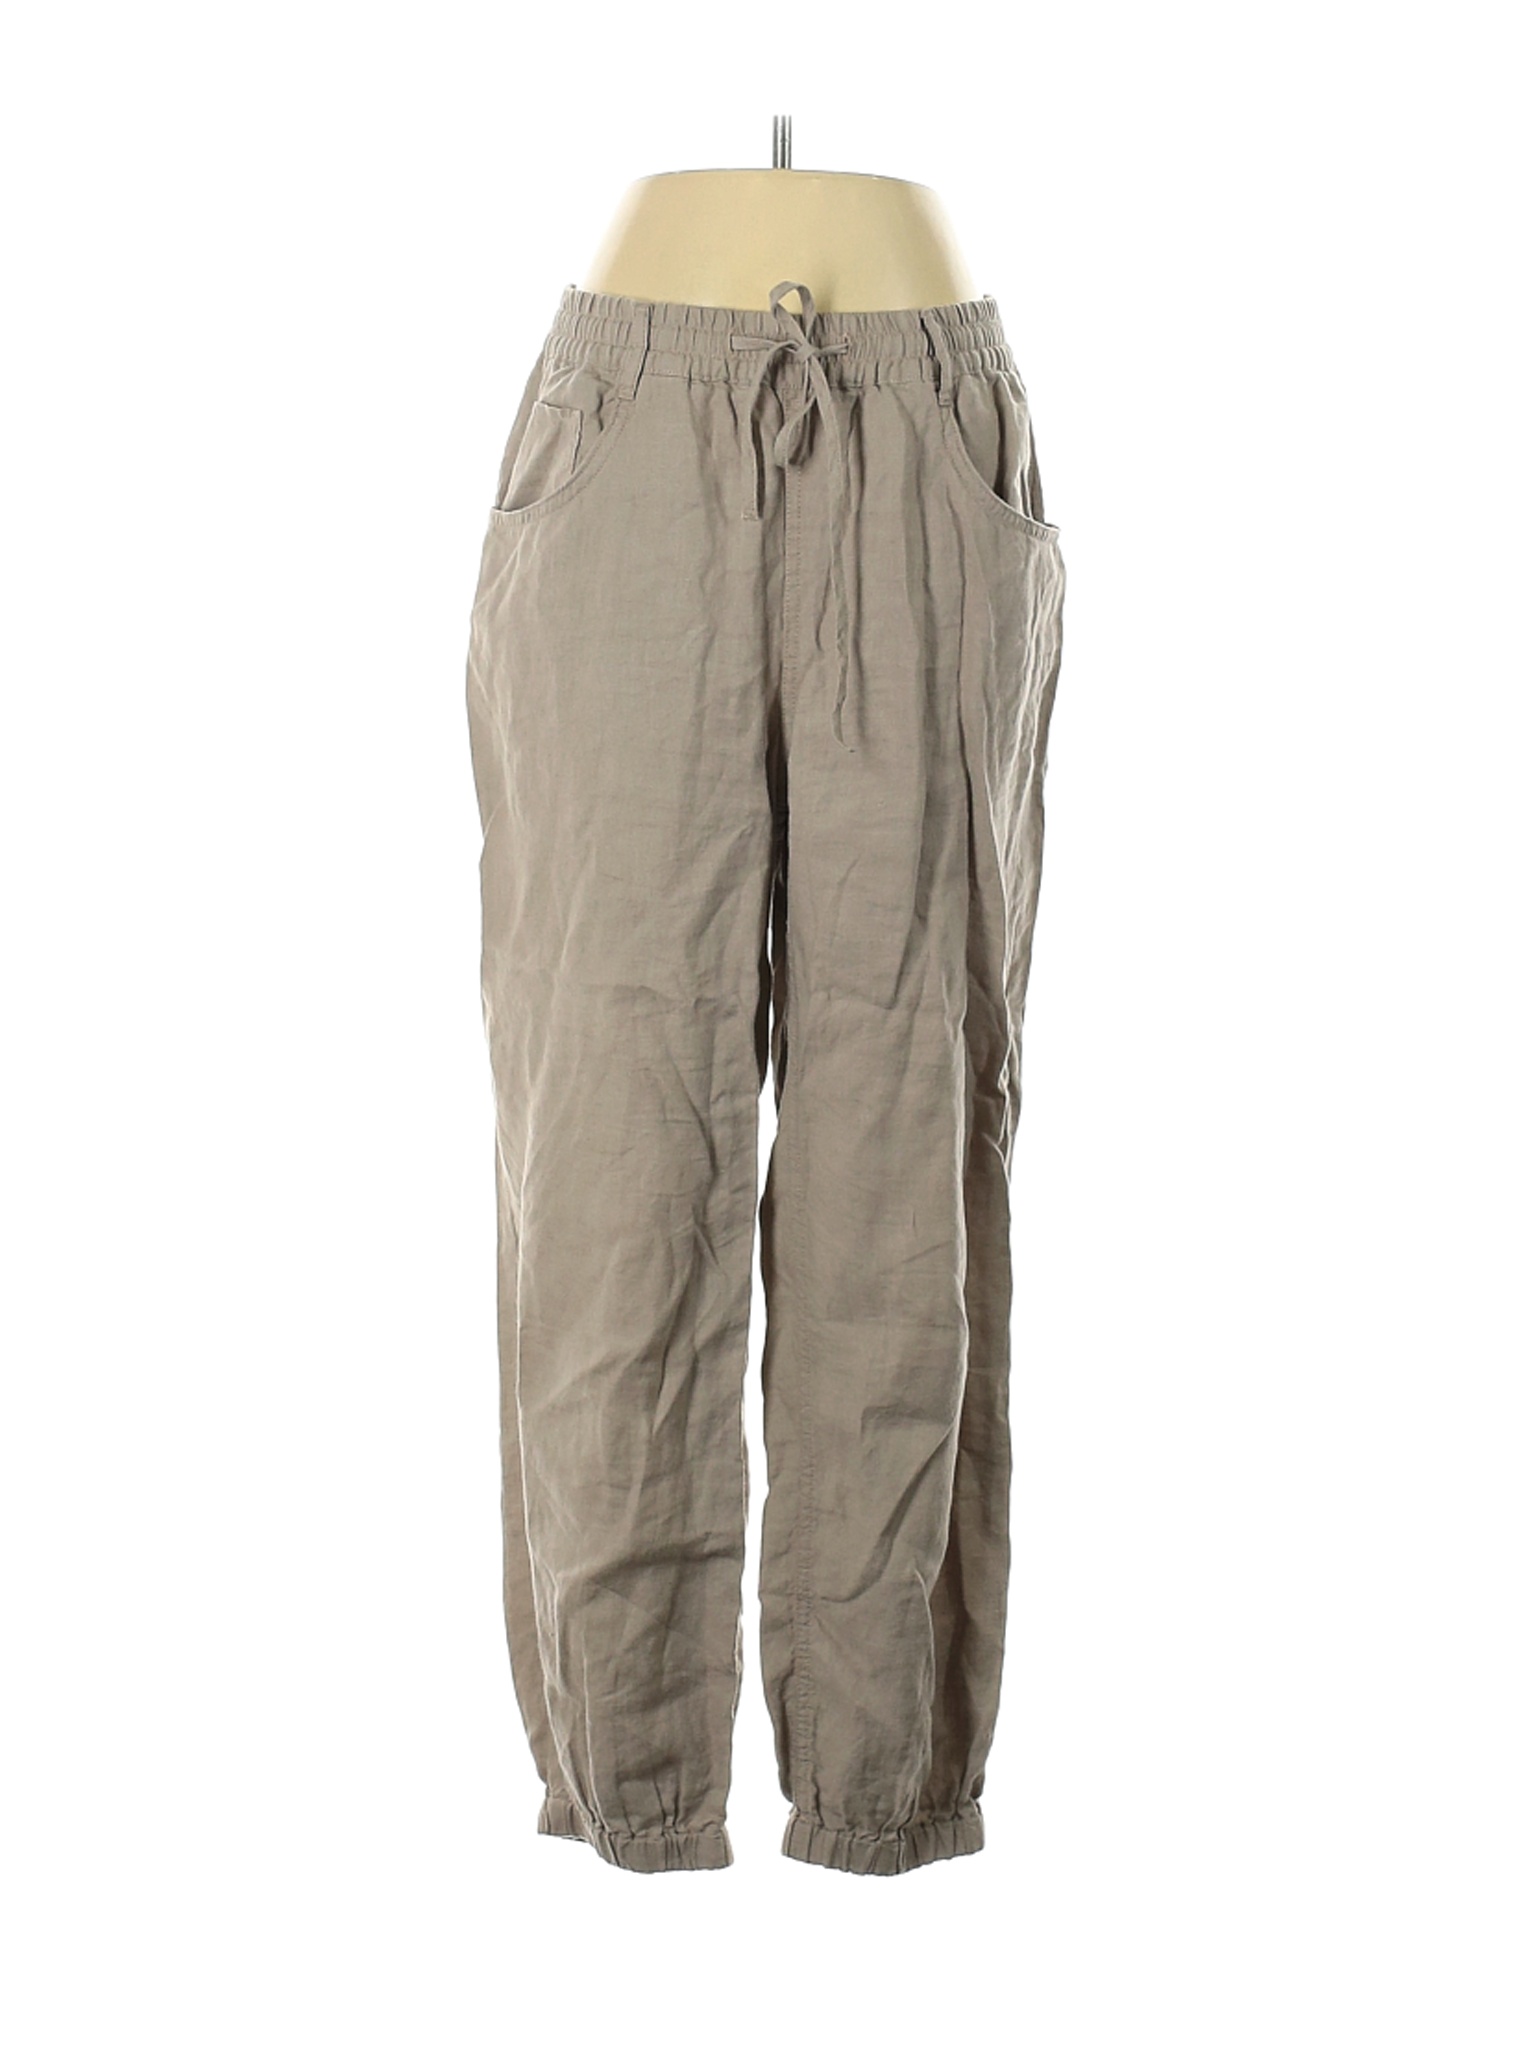 Zara Women Brown Casual Pants M | eBay